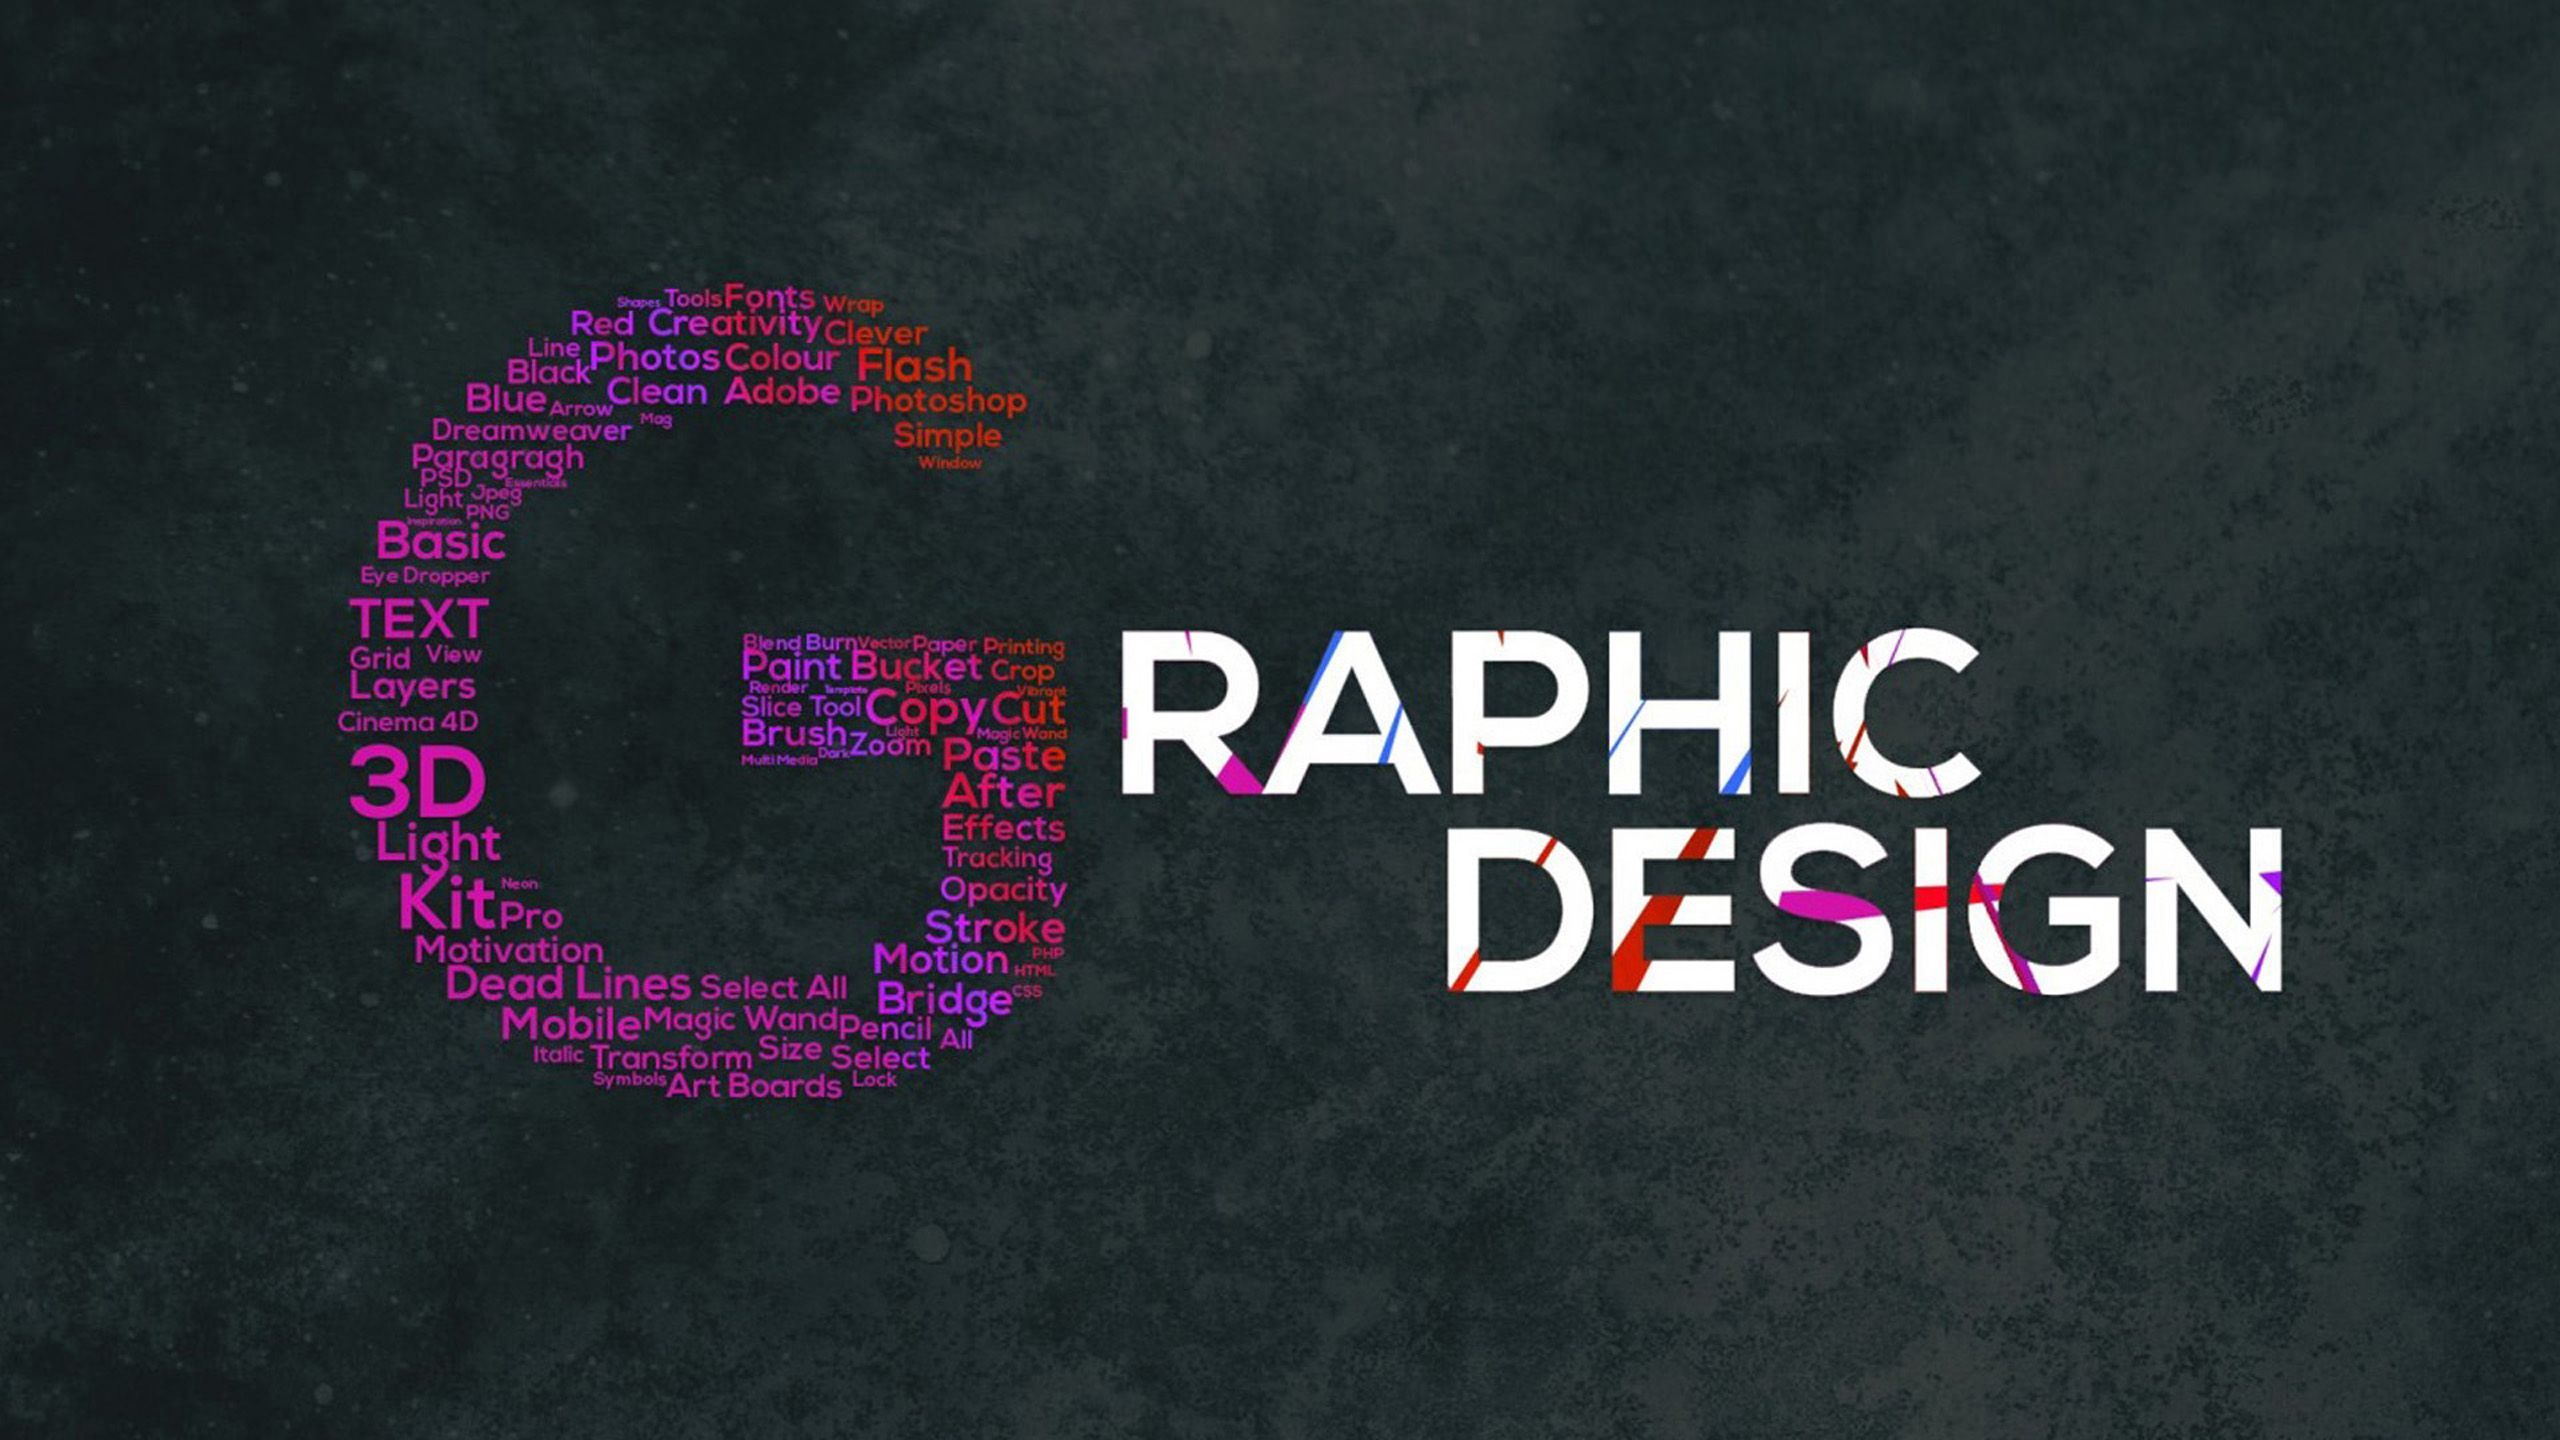 Graphic Design Desktop Wallpaper Large Image #graphic #design #art #word #wallp. Graphic design company, Learning graphic design, Creative graphic design